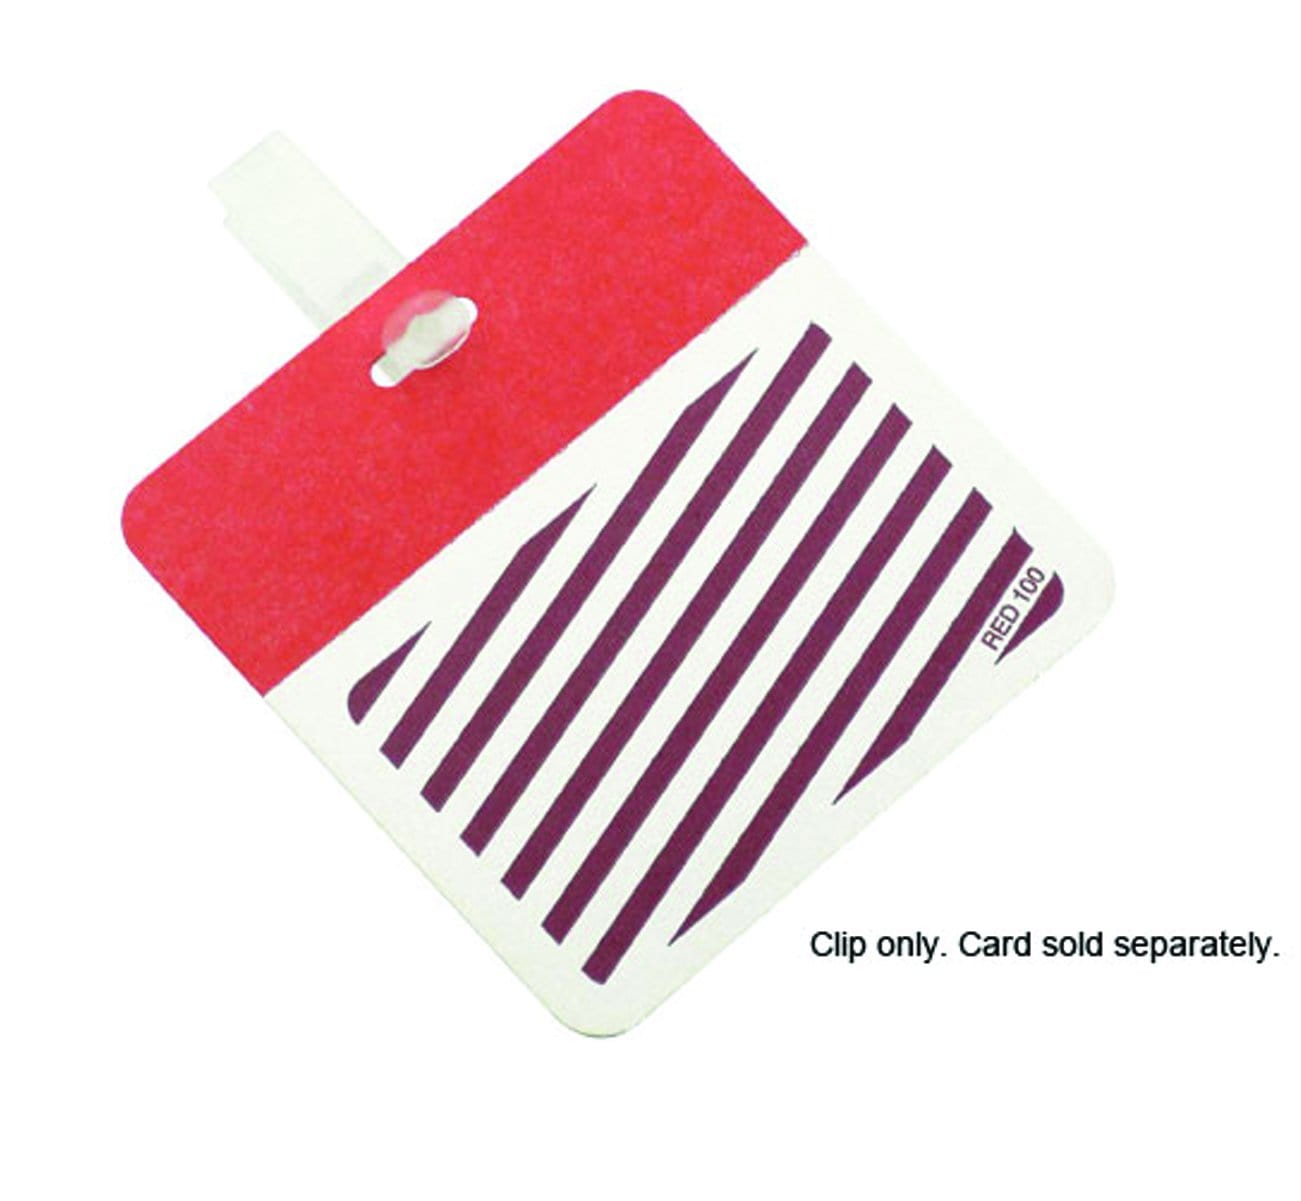 Reusable Plastic CARDclip - Badge Clip (Bag of 500 Clips) P/N 08075